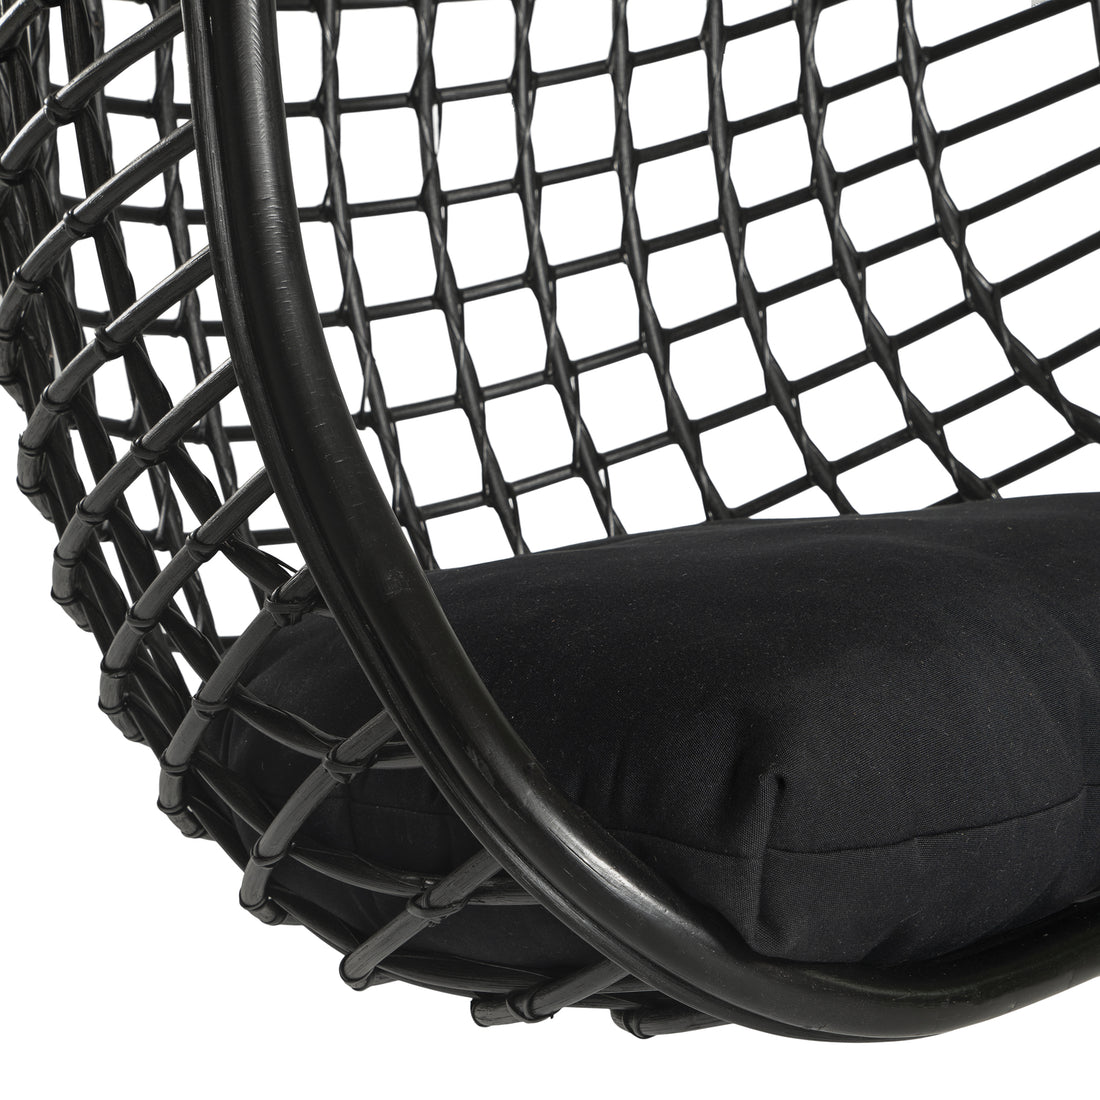 Intaaka Hanging Chair | Black